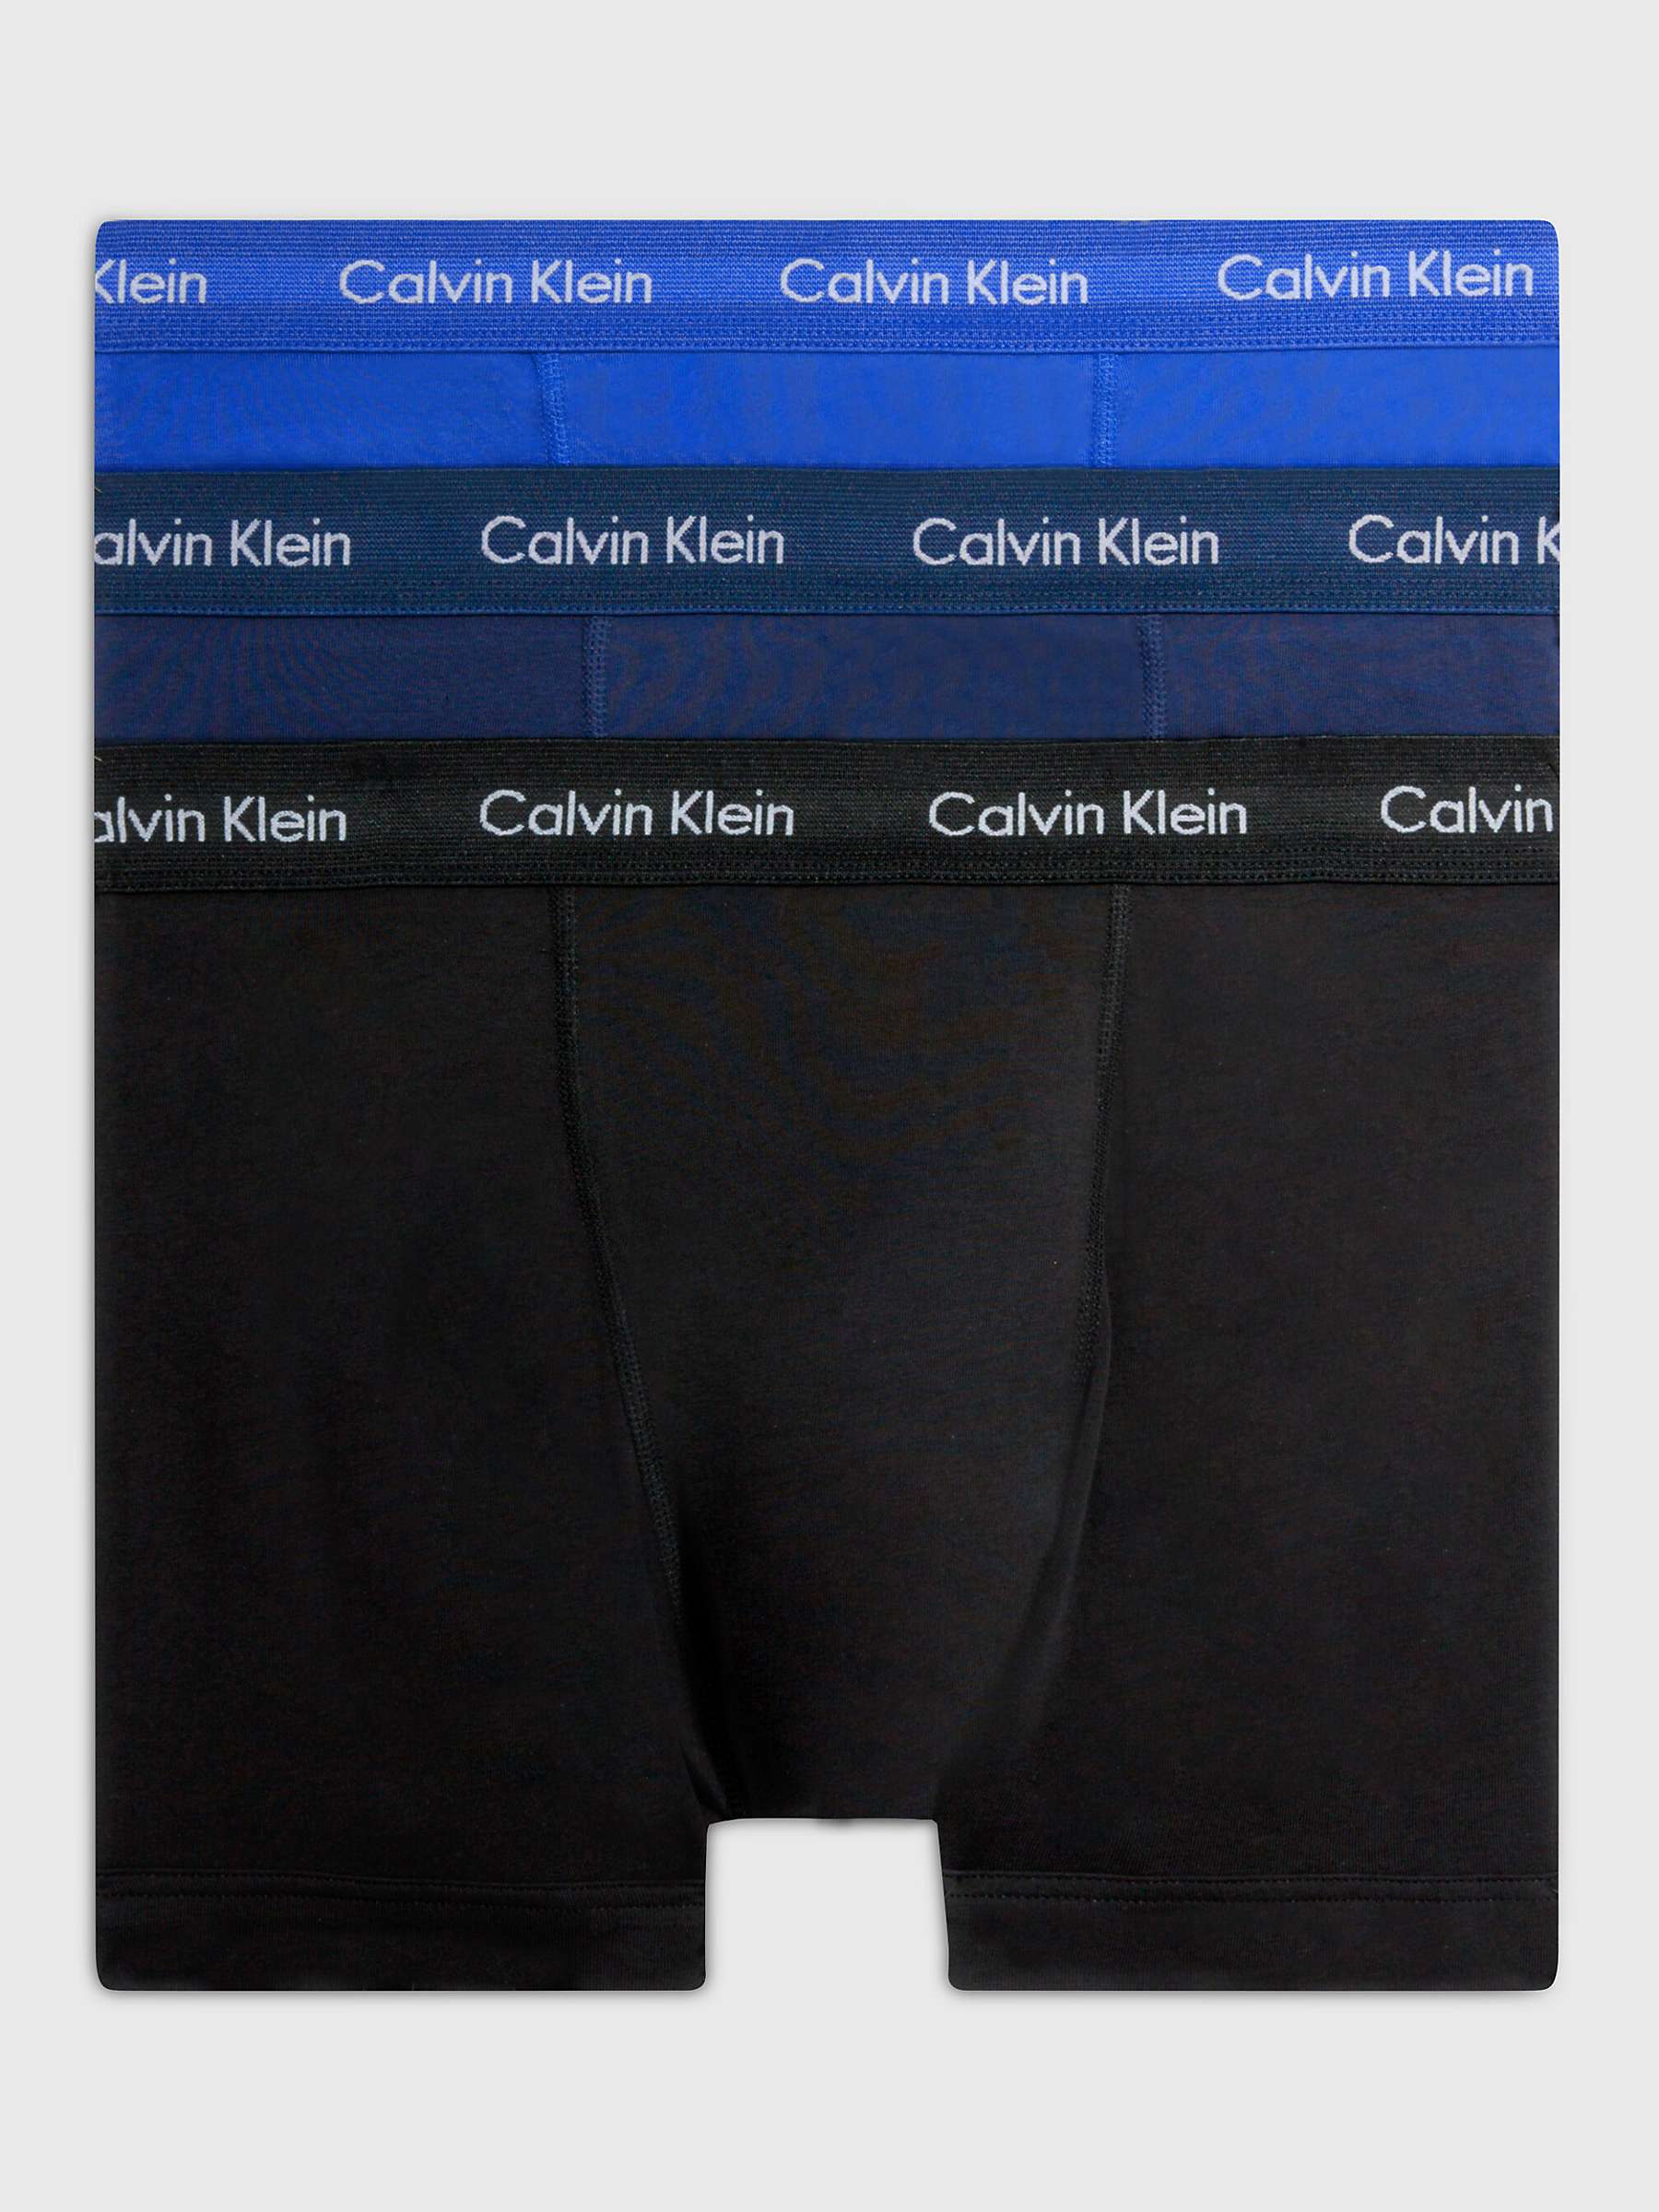 Calvin Klein Regular Cotton Stretch Trunks, Pack of 3, Black/Blue ...